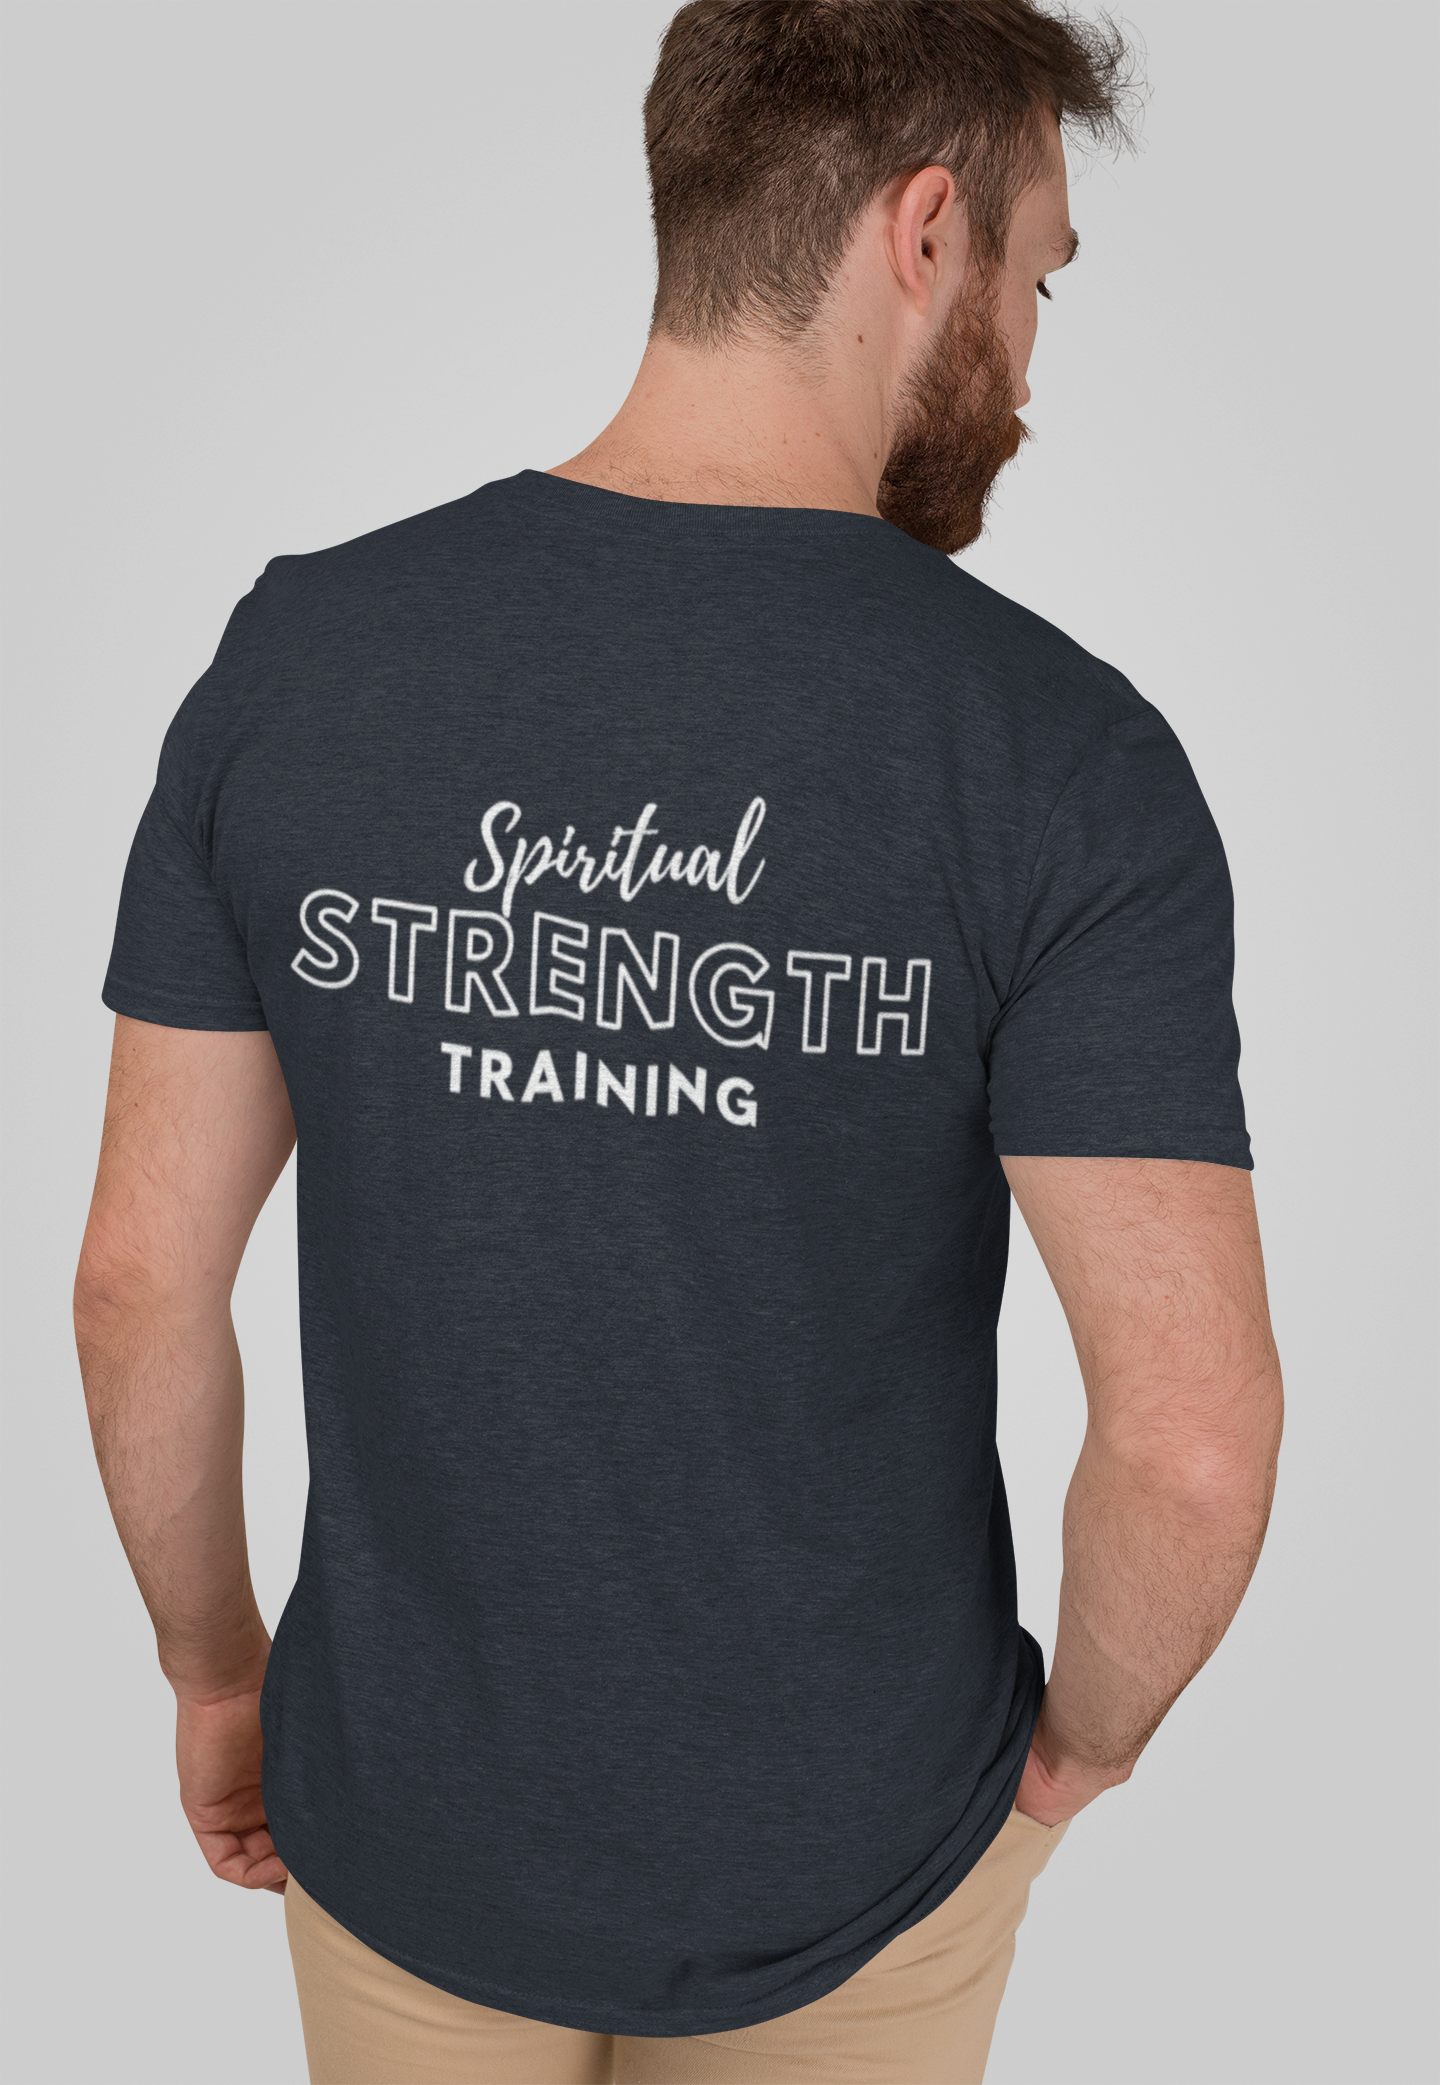 Spiritual Strength Training